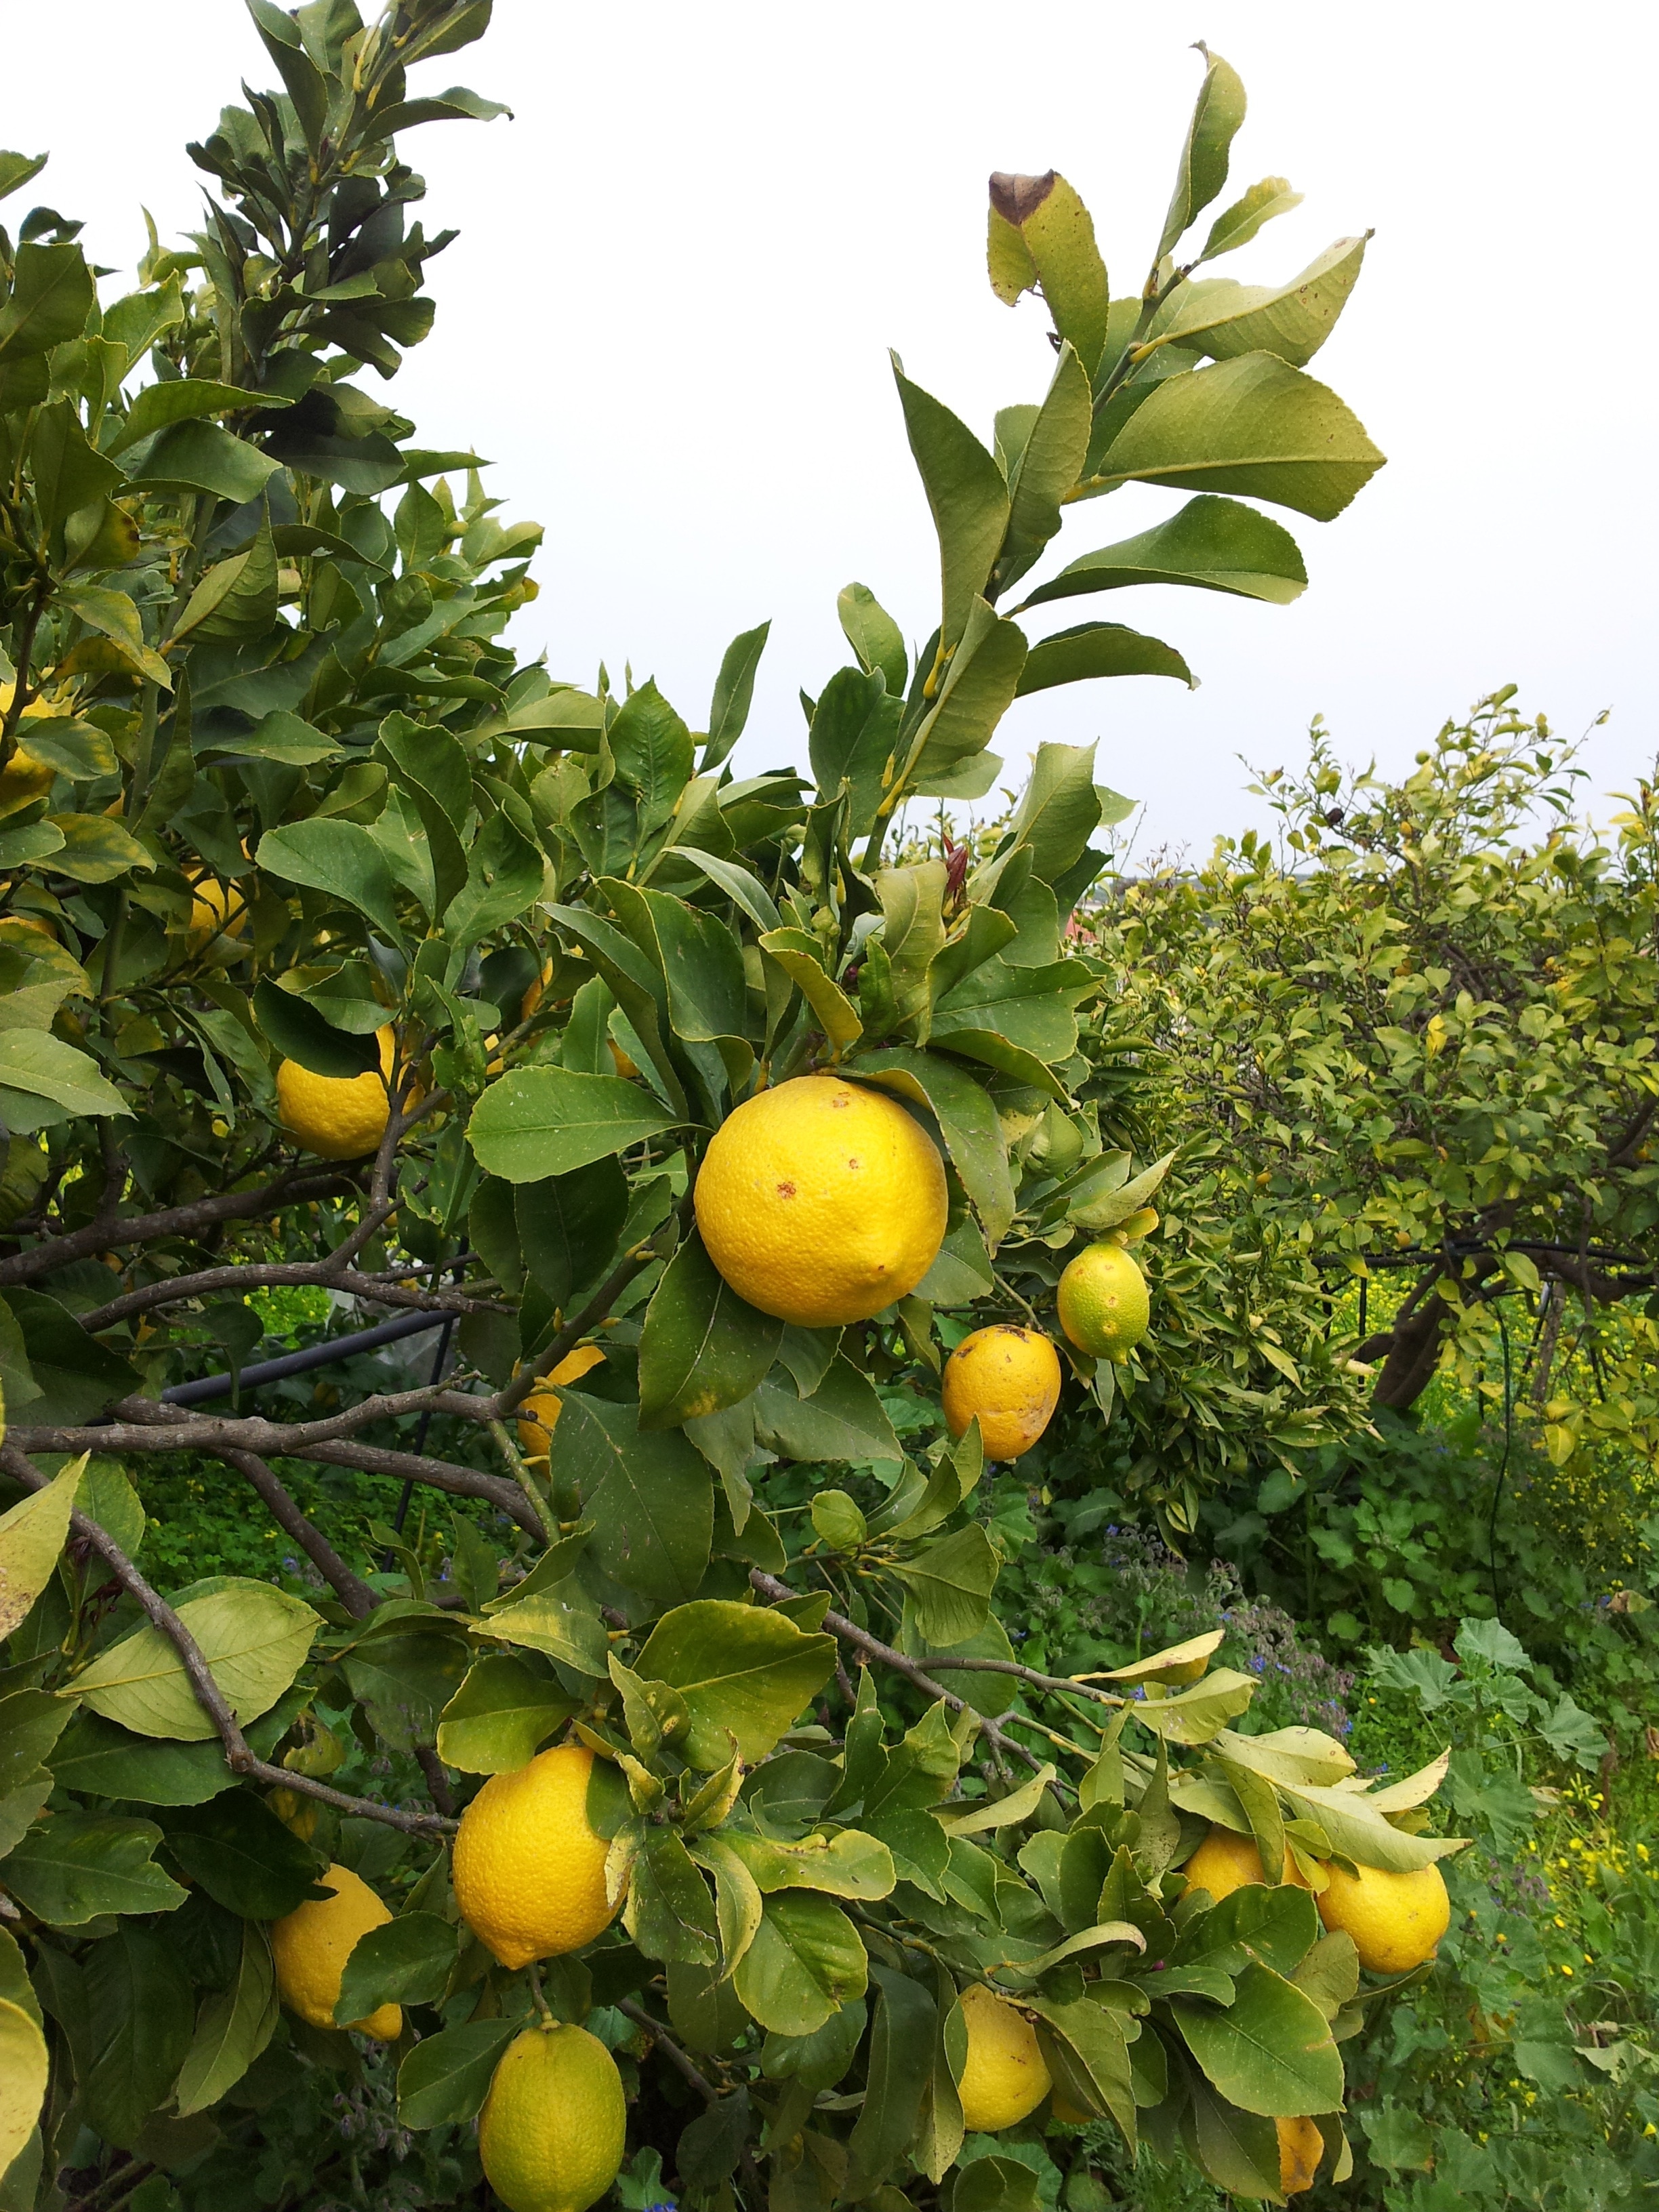 yellow lemon fruit